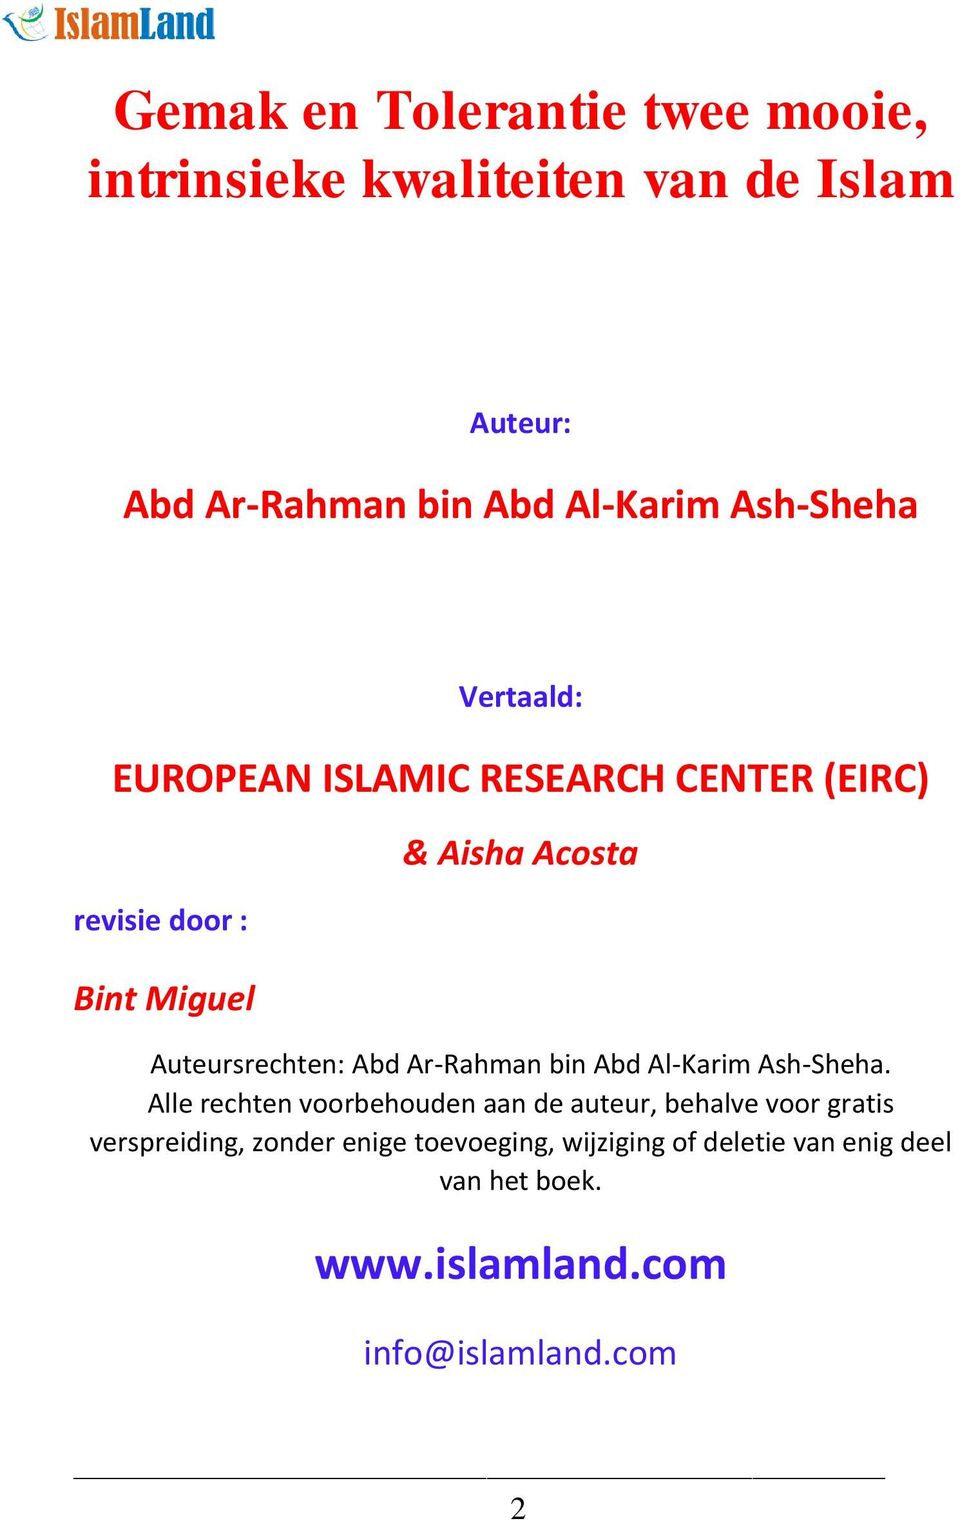 Auteursrechten: Abd Ar-Rahman bin Abd Al-Karim Ash-Sheha.